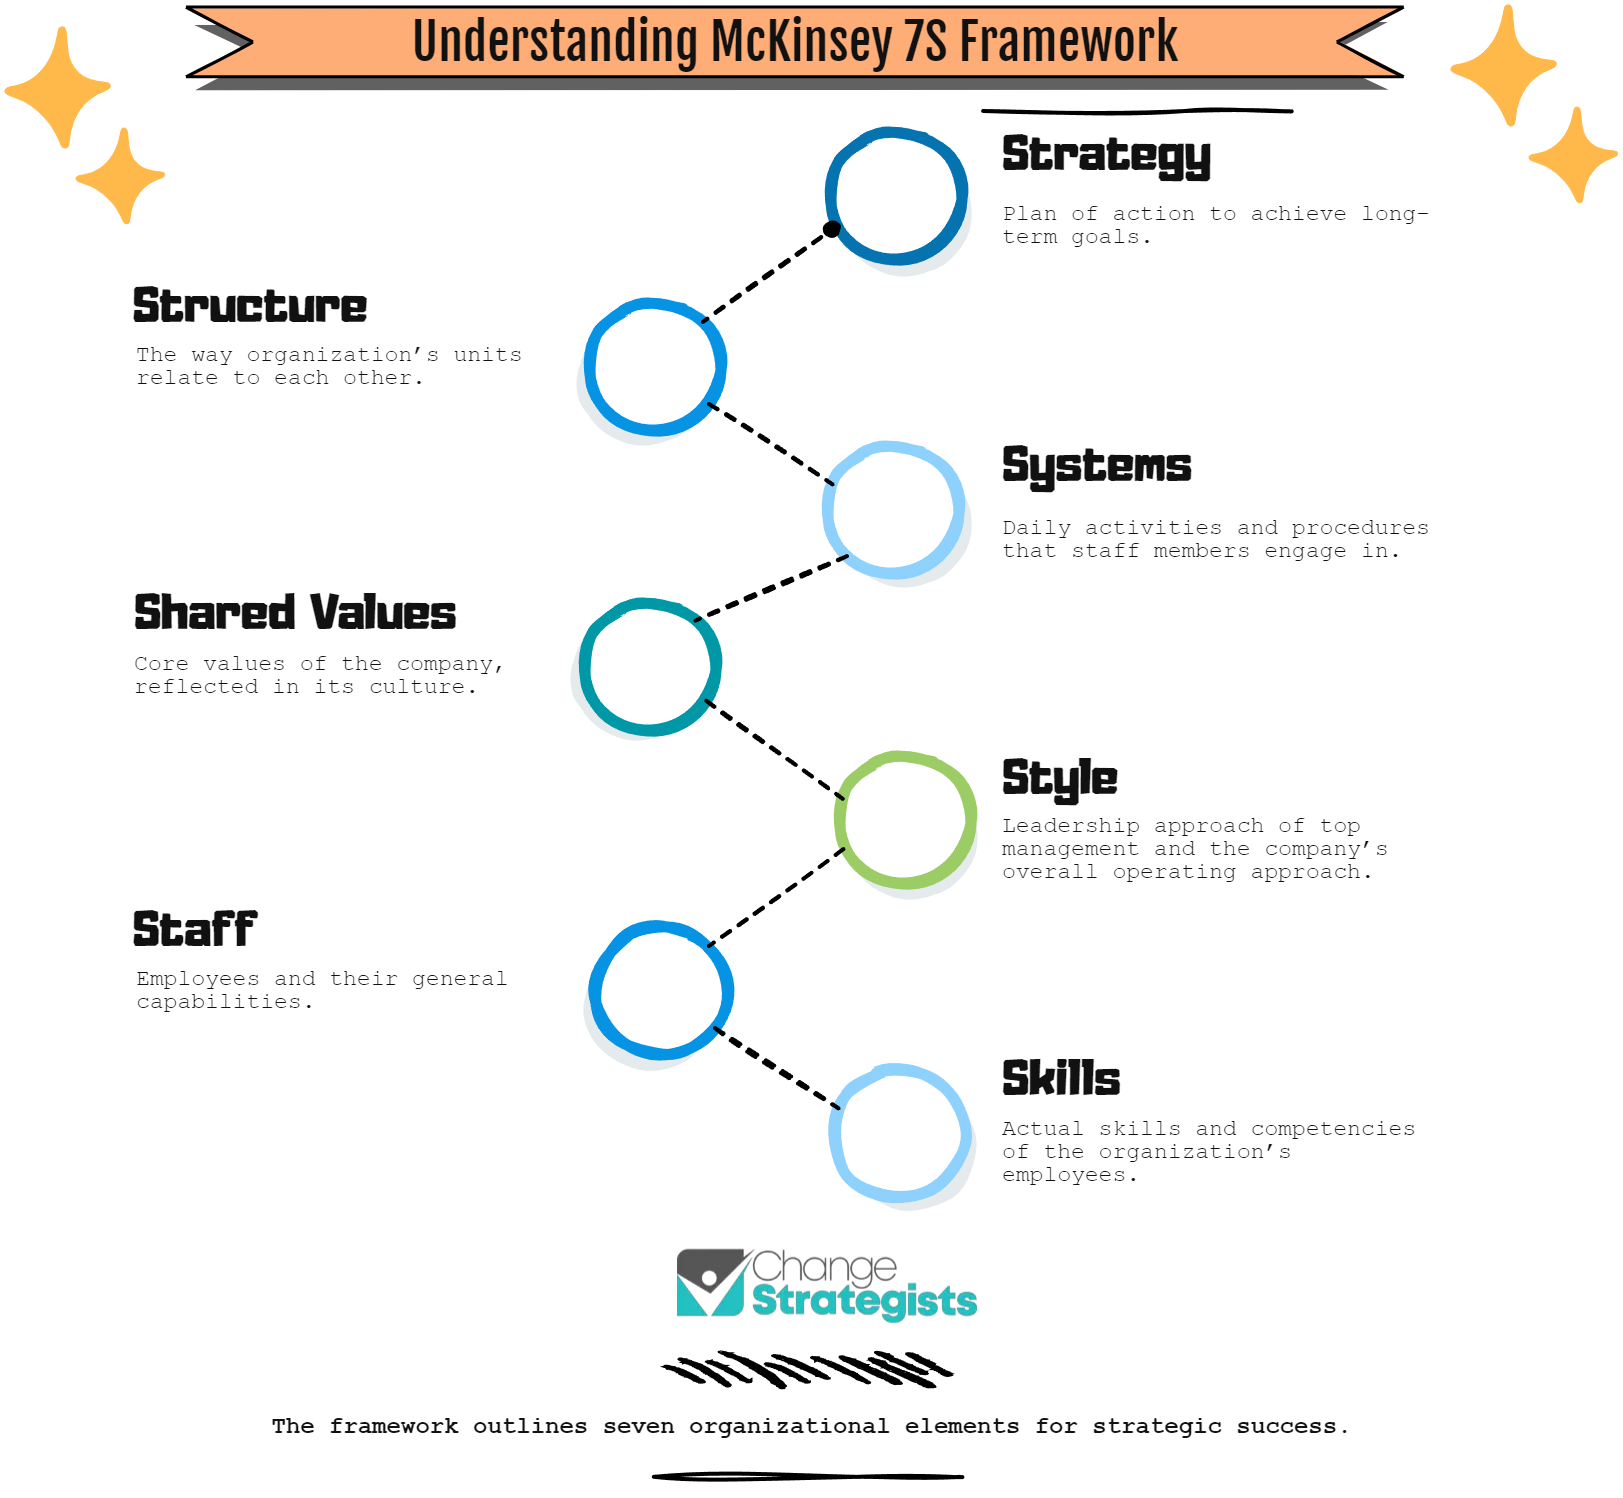 Understanding mcdonald's framework infographic.